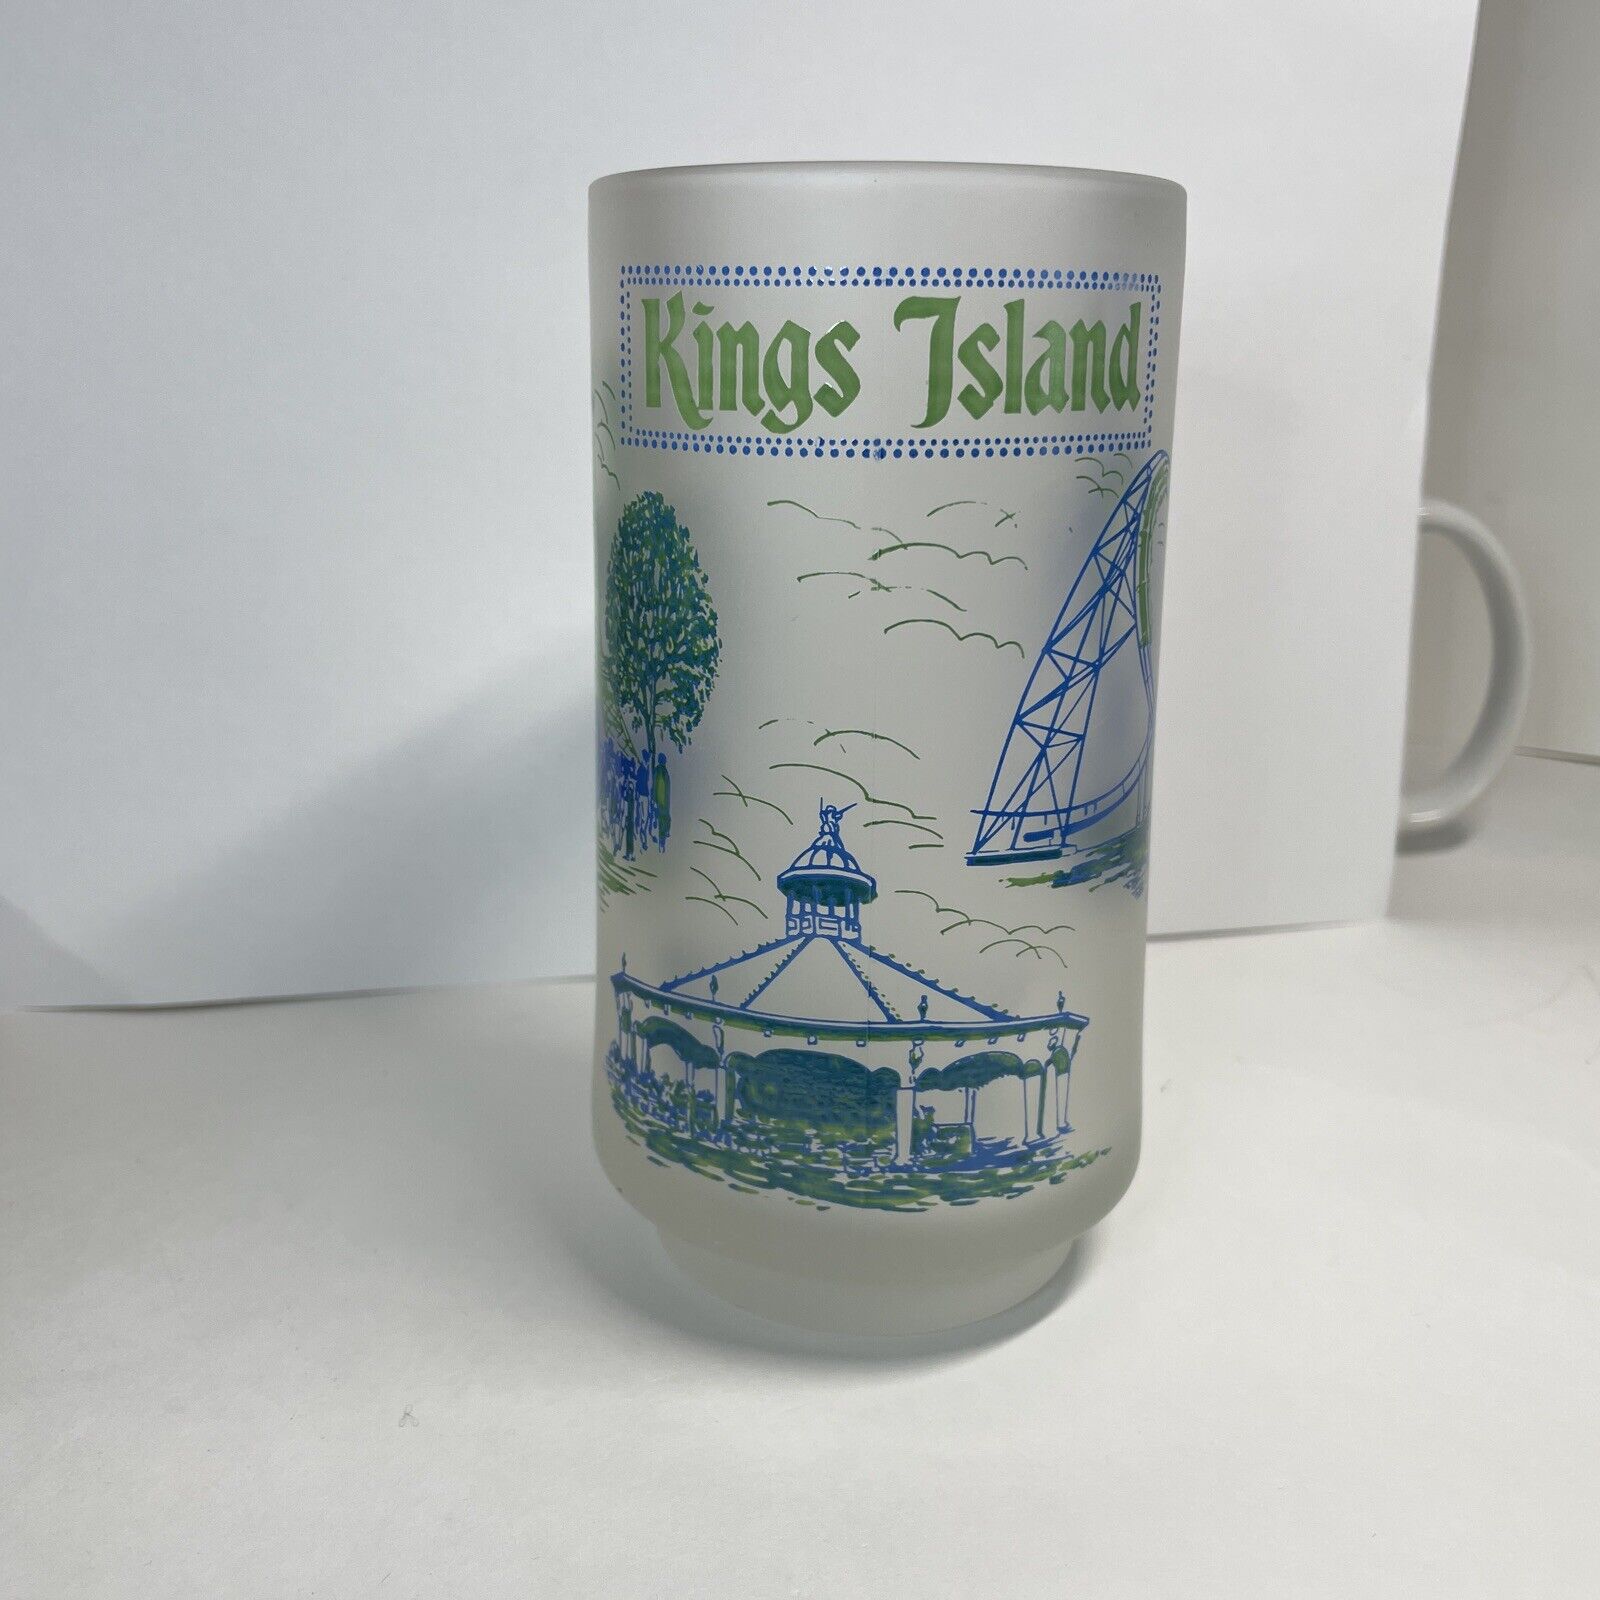 Kings Island Frosted Glass Mug 5.5” Vintage Roller Coaster Blue Green Graphics